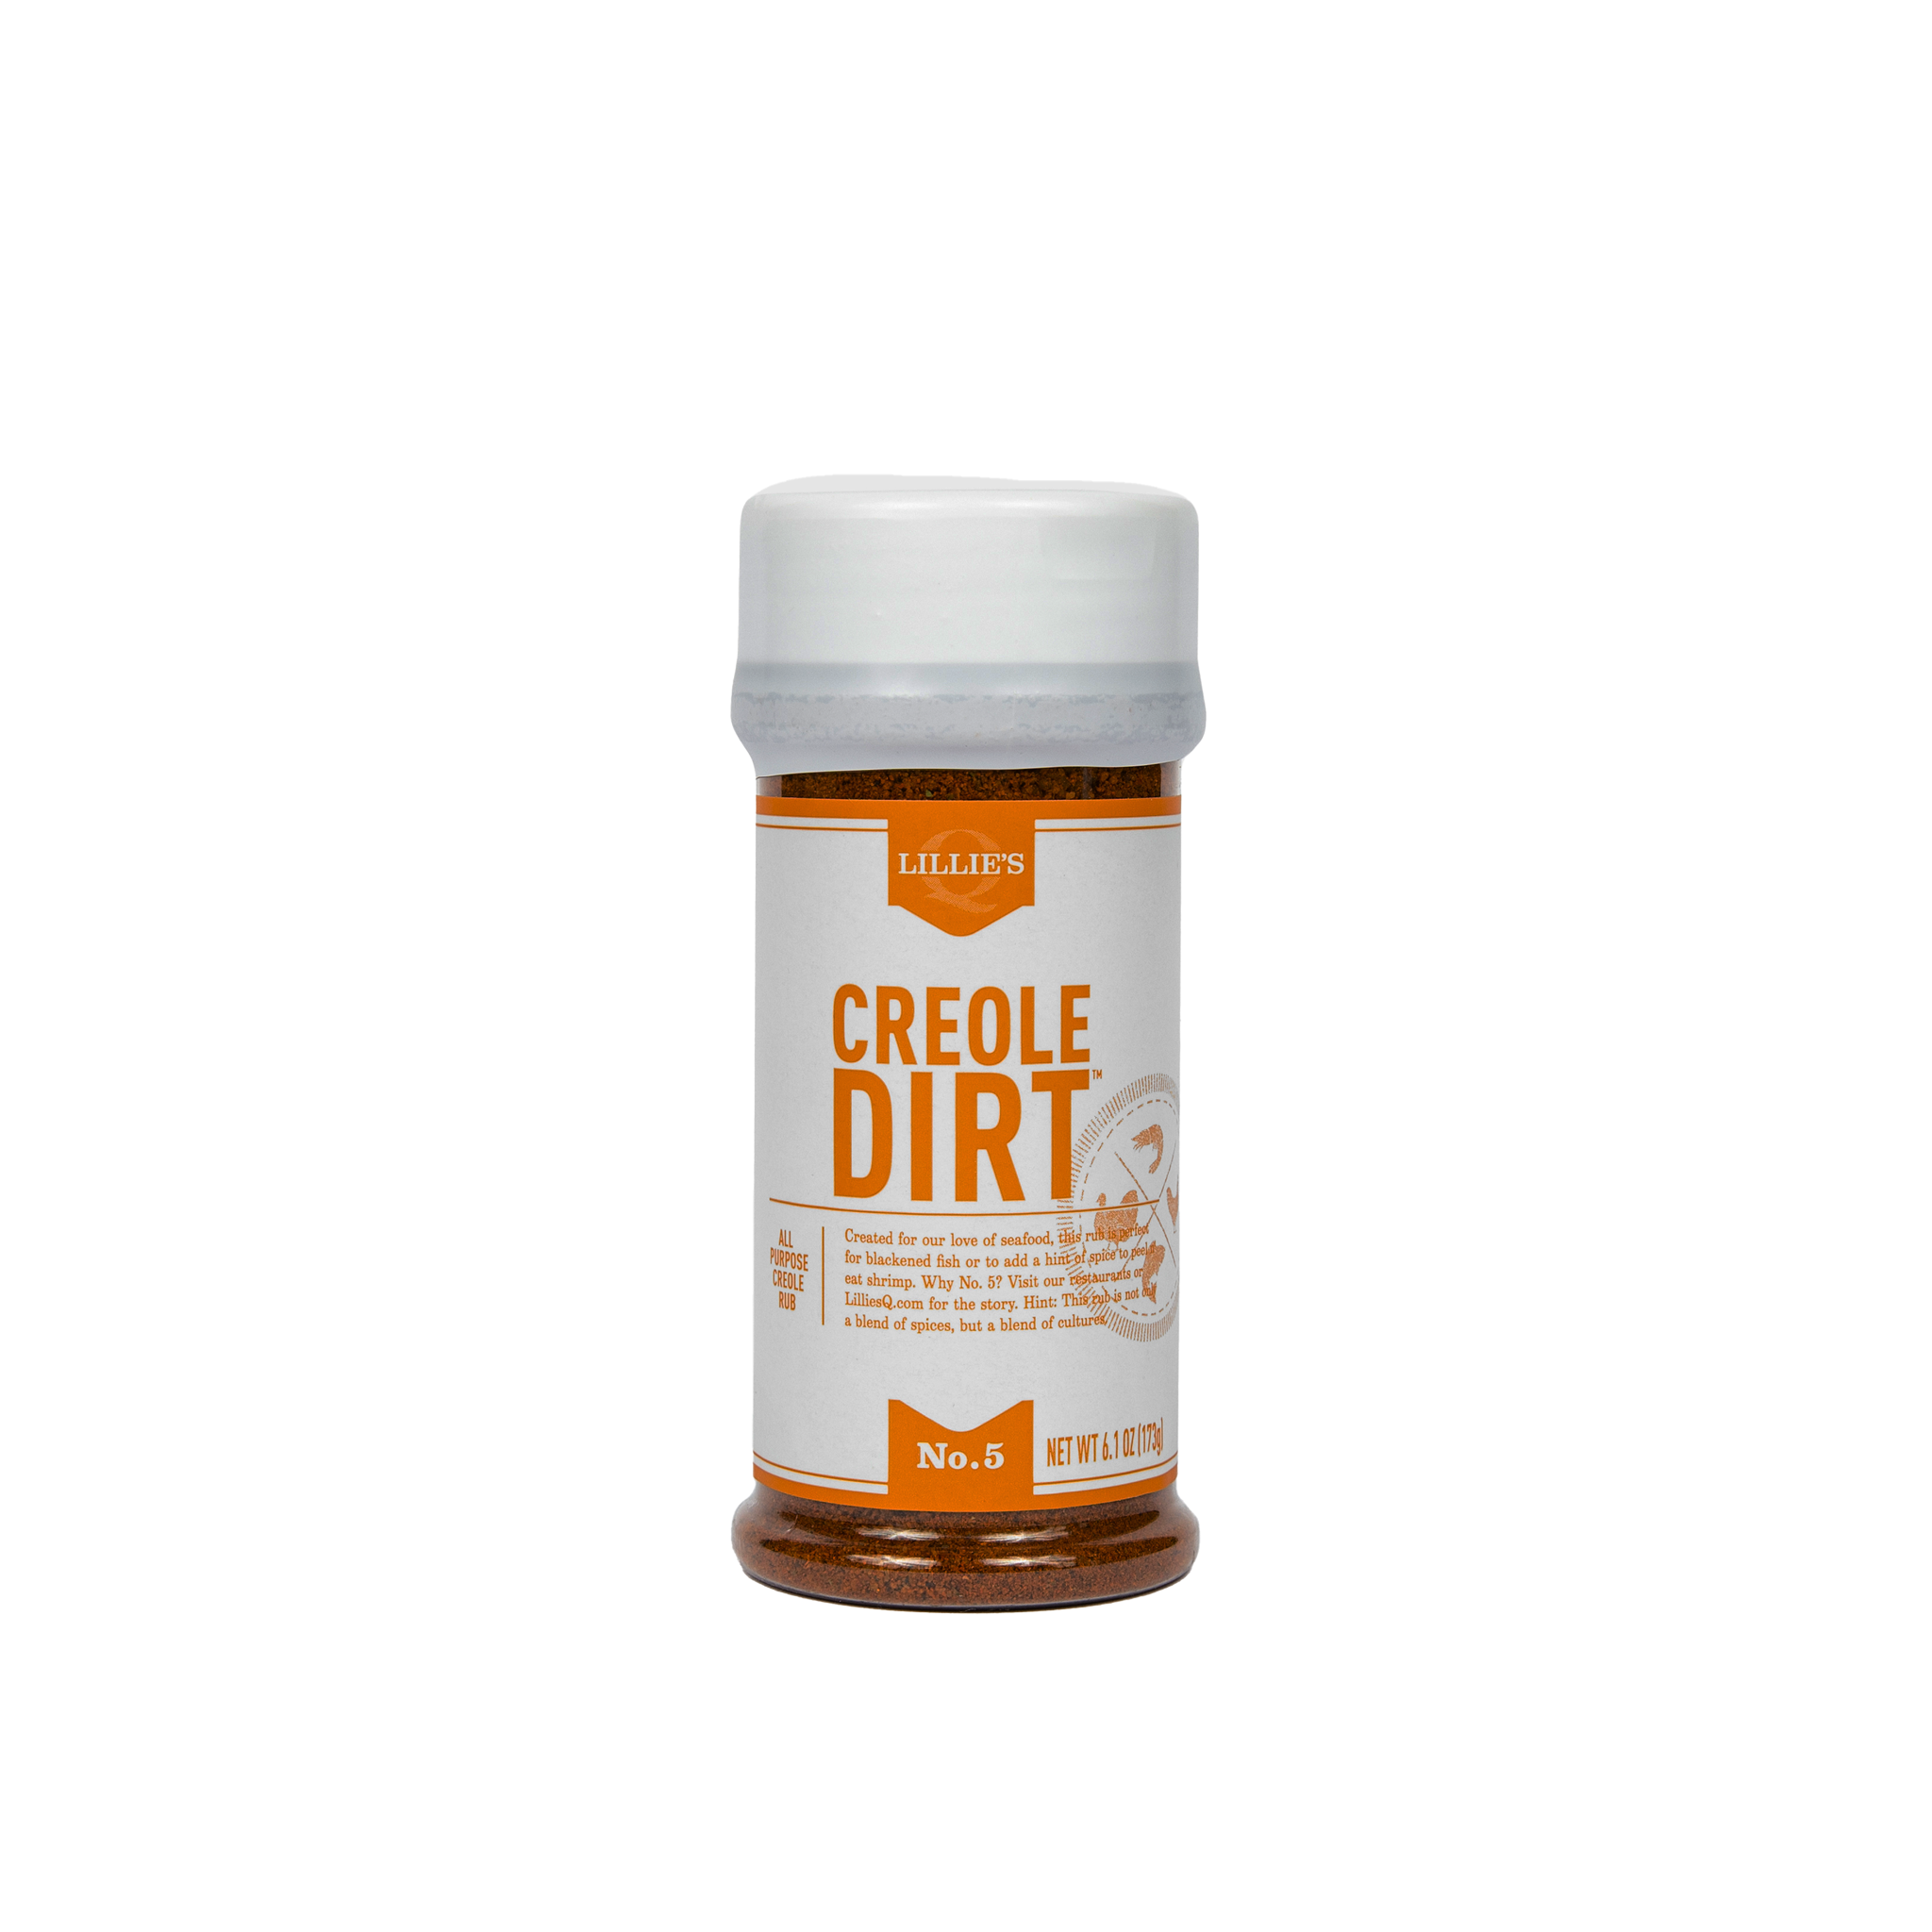 Creole Dirt 6.1 oz